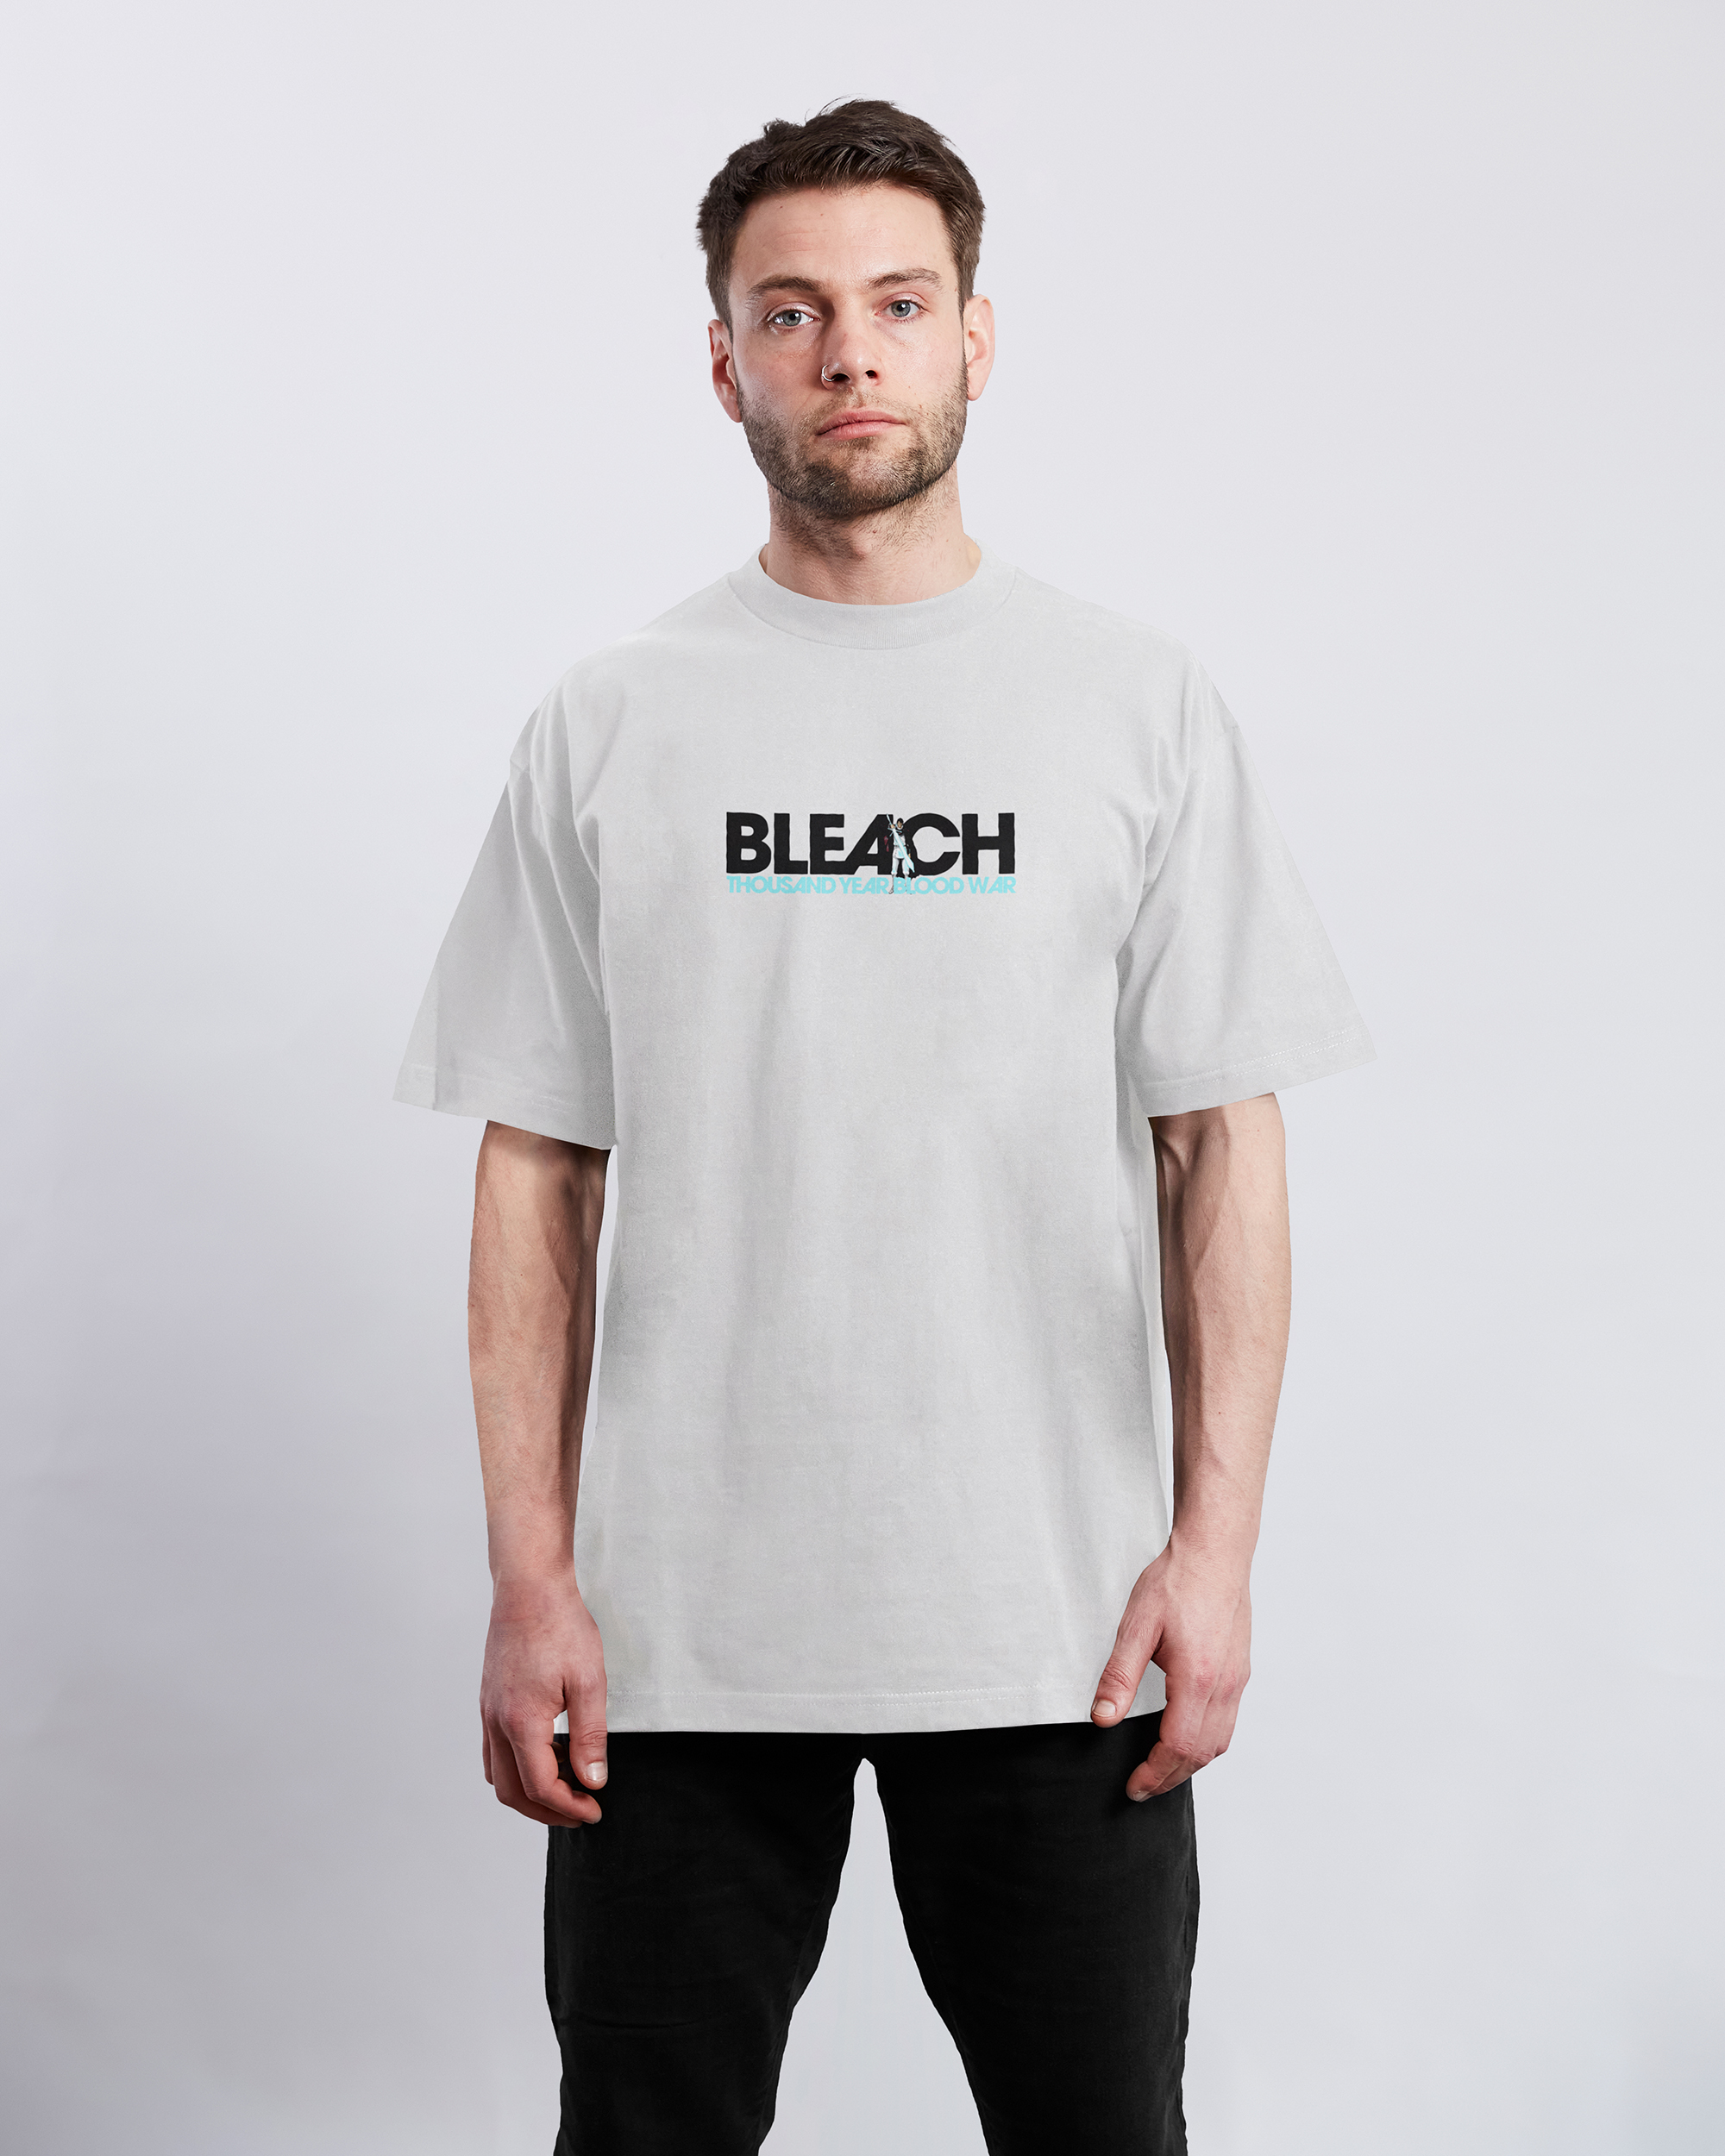 Yhwach Bleach | White T-Shirt TYBW